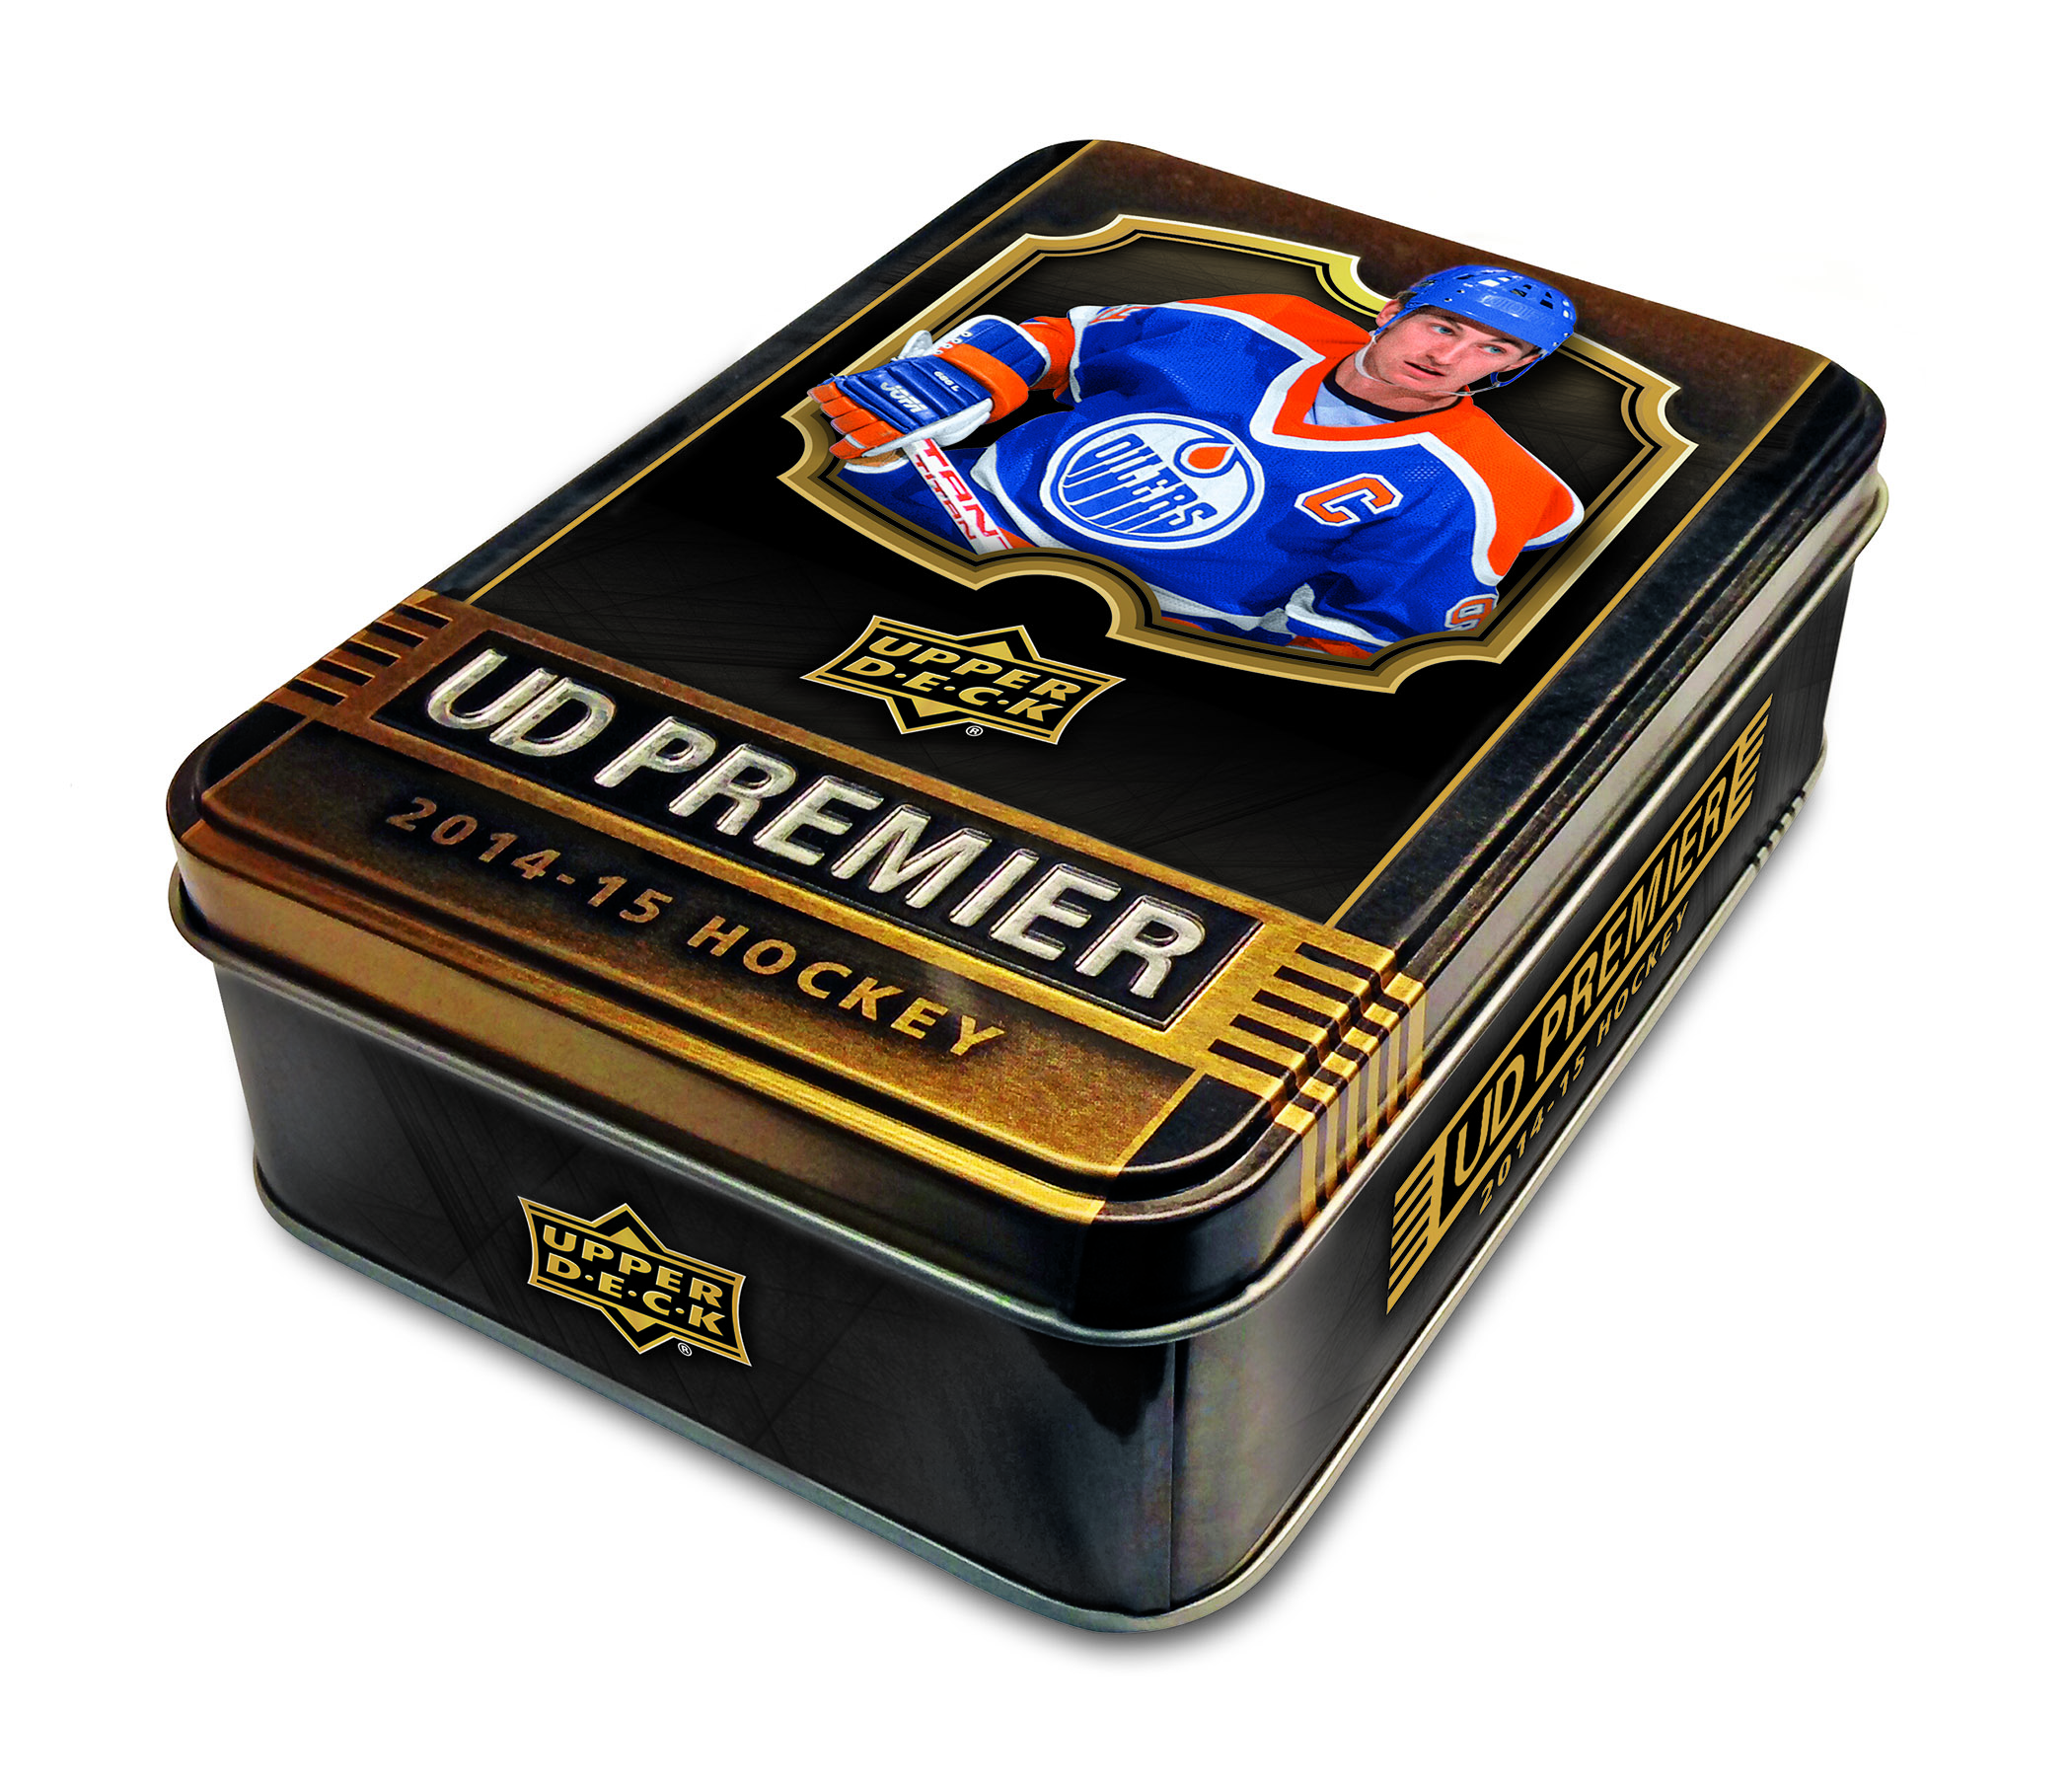 2014-15 Upper Deck Premier Hockey Hobby Box